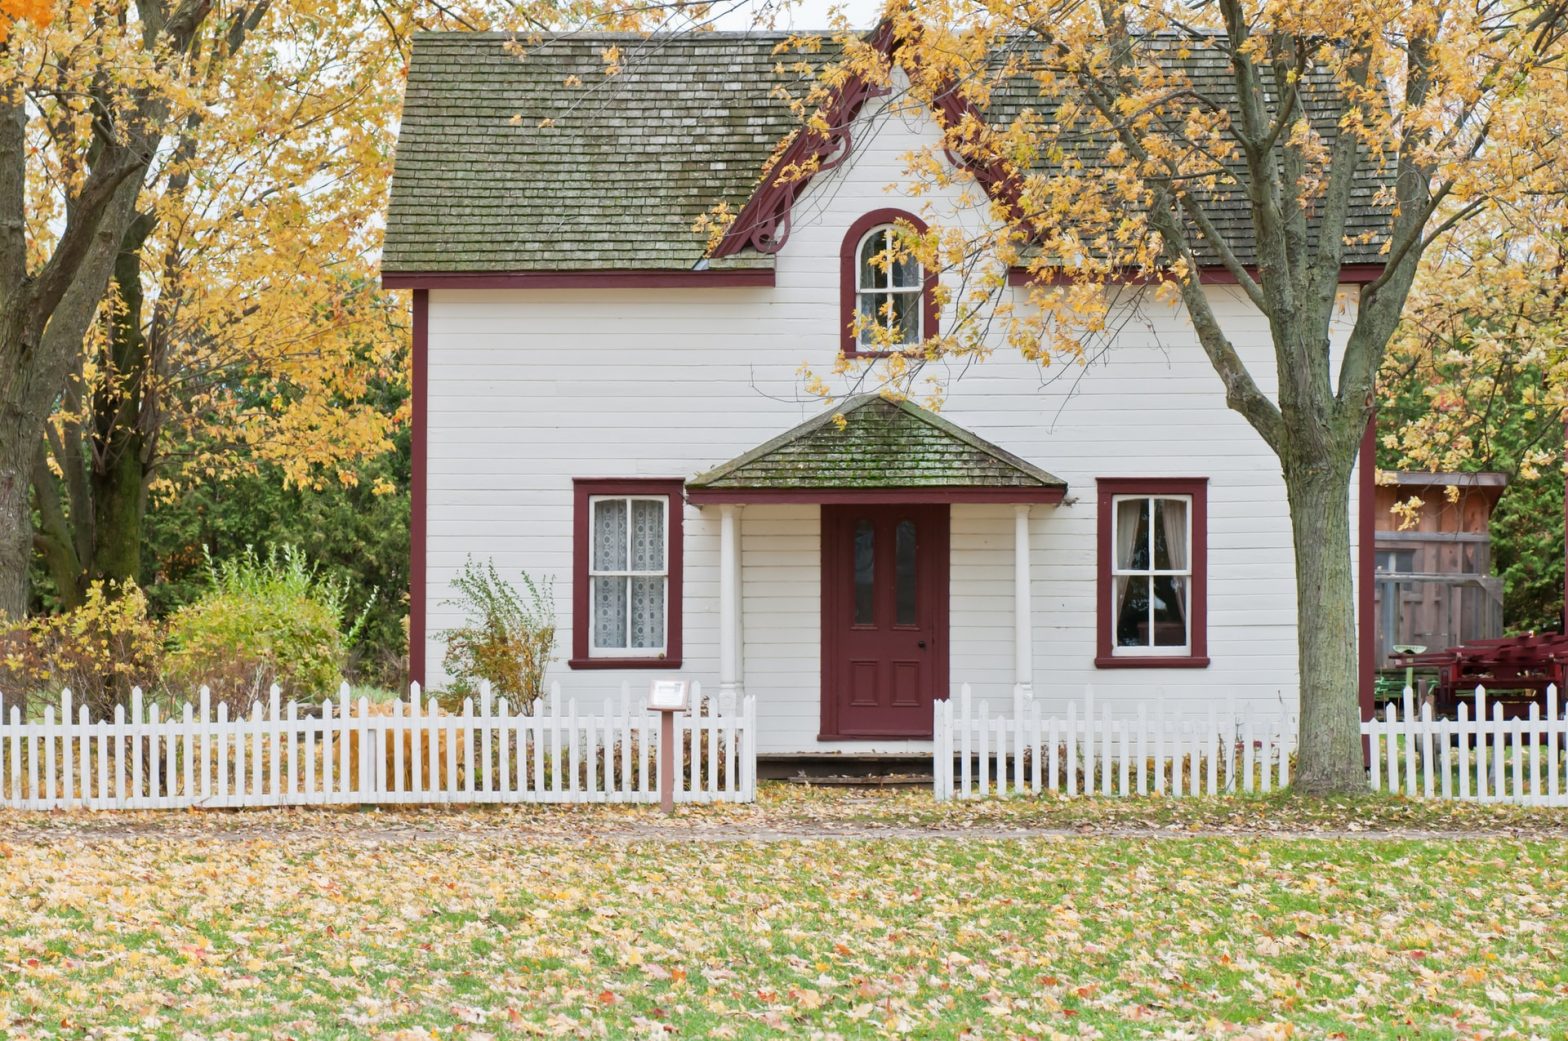 Quaint home among fall foliage